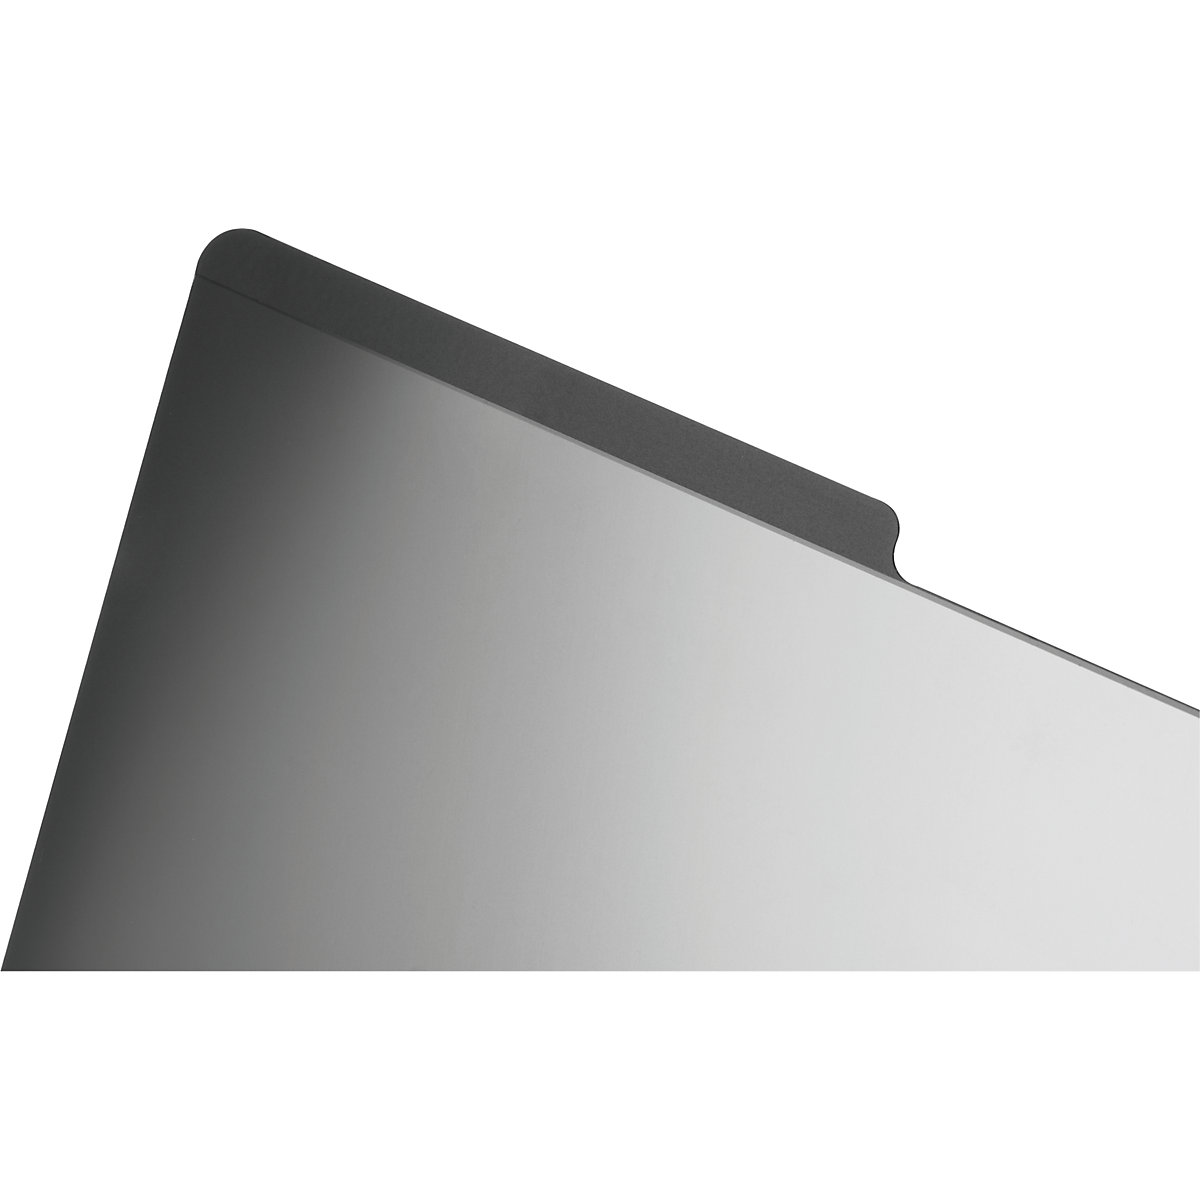 Filtro de privacidade MAGNETIC MacBook Pro® – DURABLE (Imagem do produto 11)-10